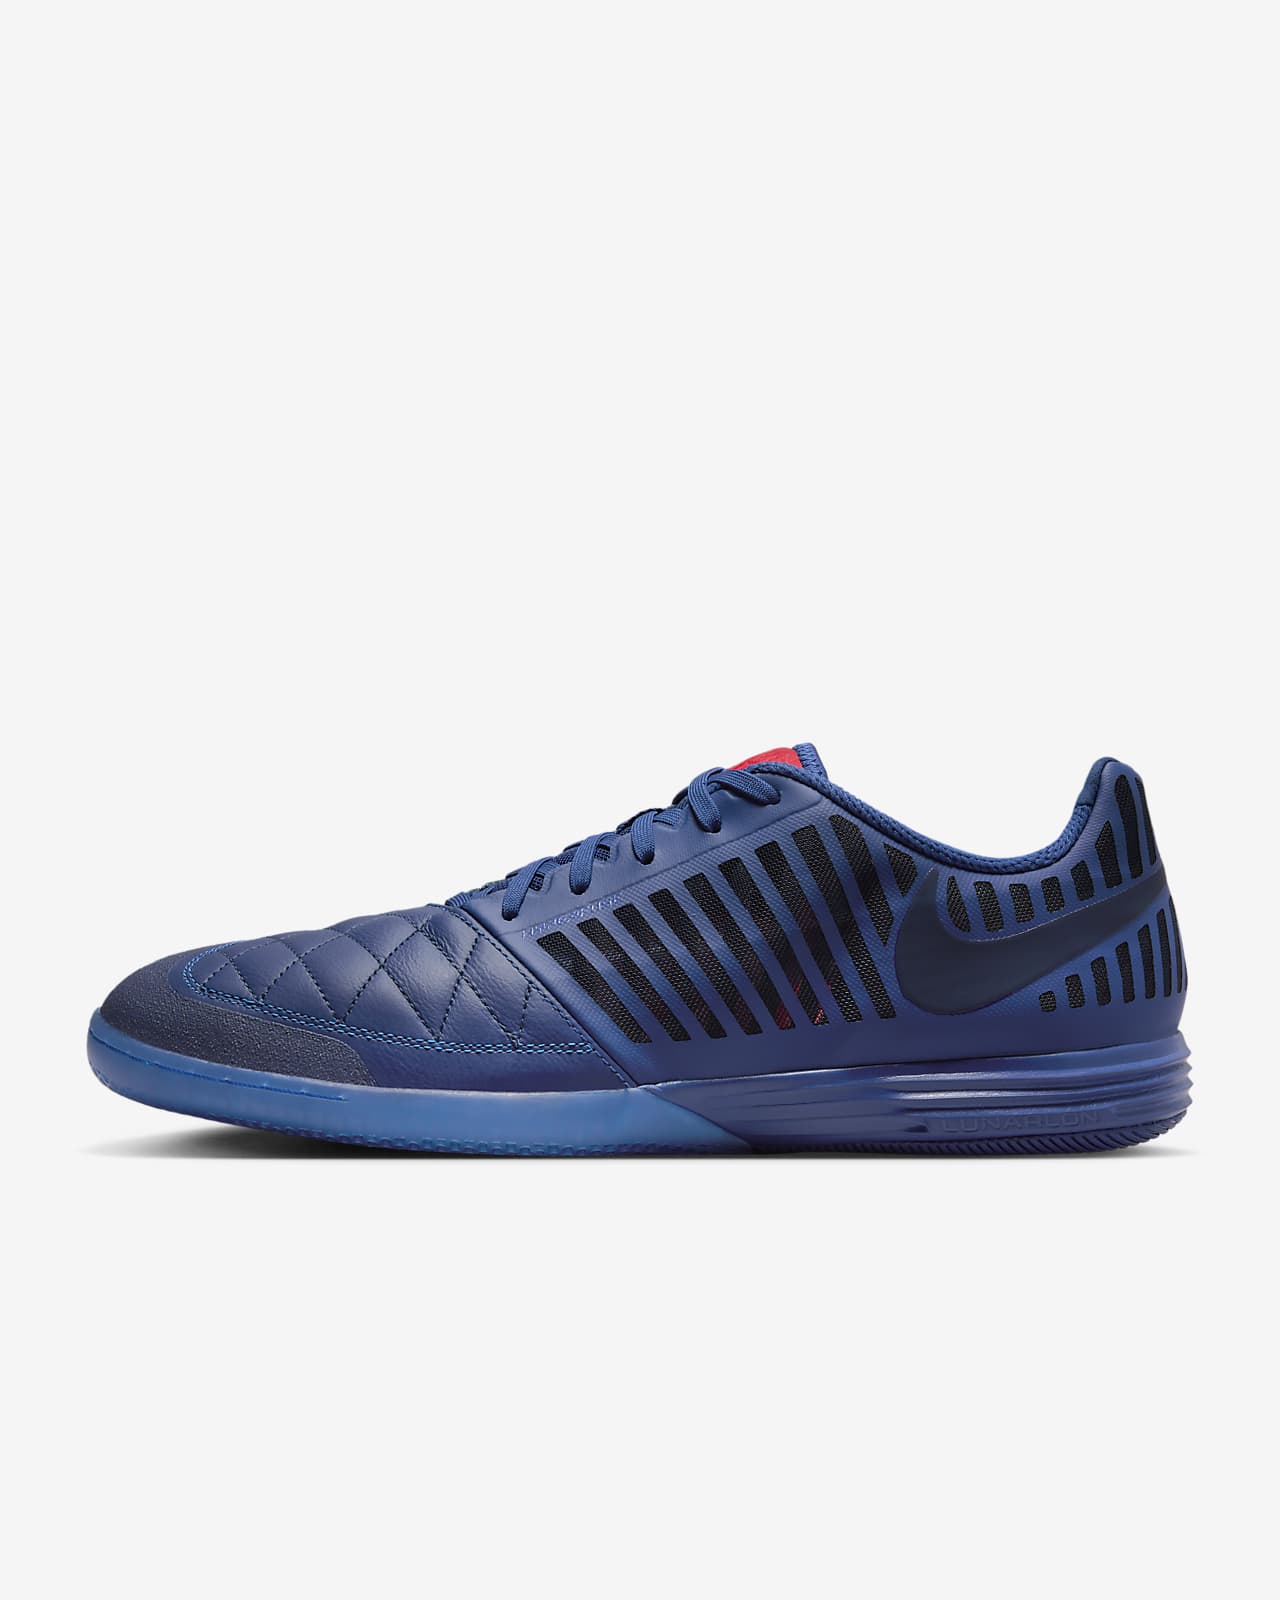 Nike Lunargato II Indoor/Court Low-Top Soccer Shoes.